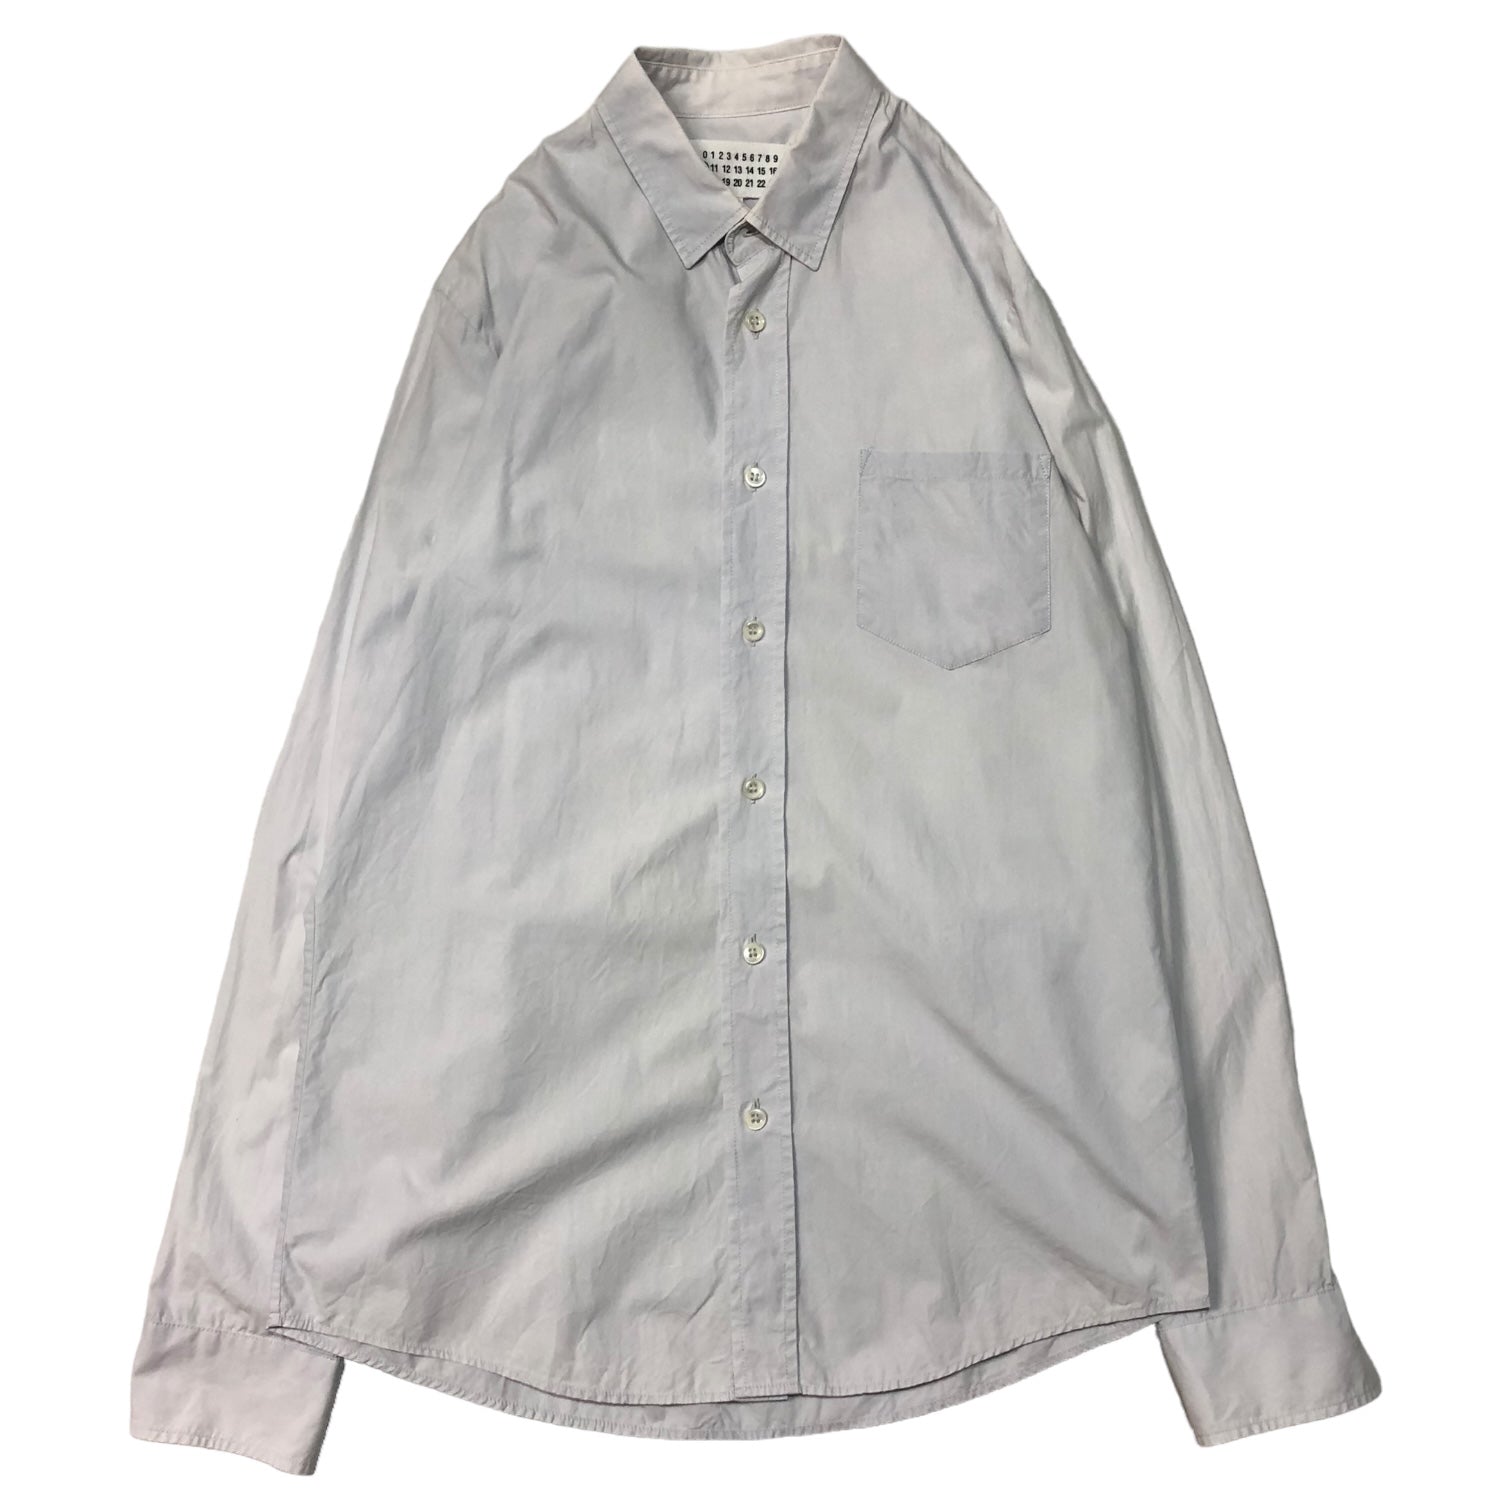 MAISON MARGIELA(メゾンマルジェラ) 12SS Punching processing regular collar  shirt/パンチング加工レギュラーカラーシャツ S30DL0215 44(S程度) ライトグレー